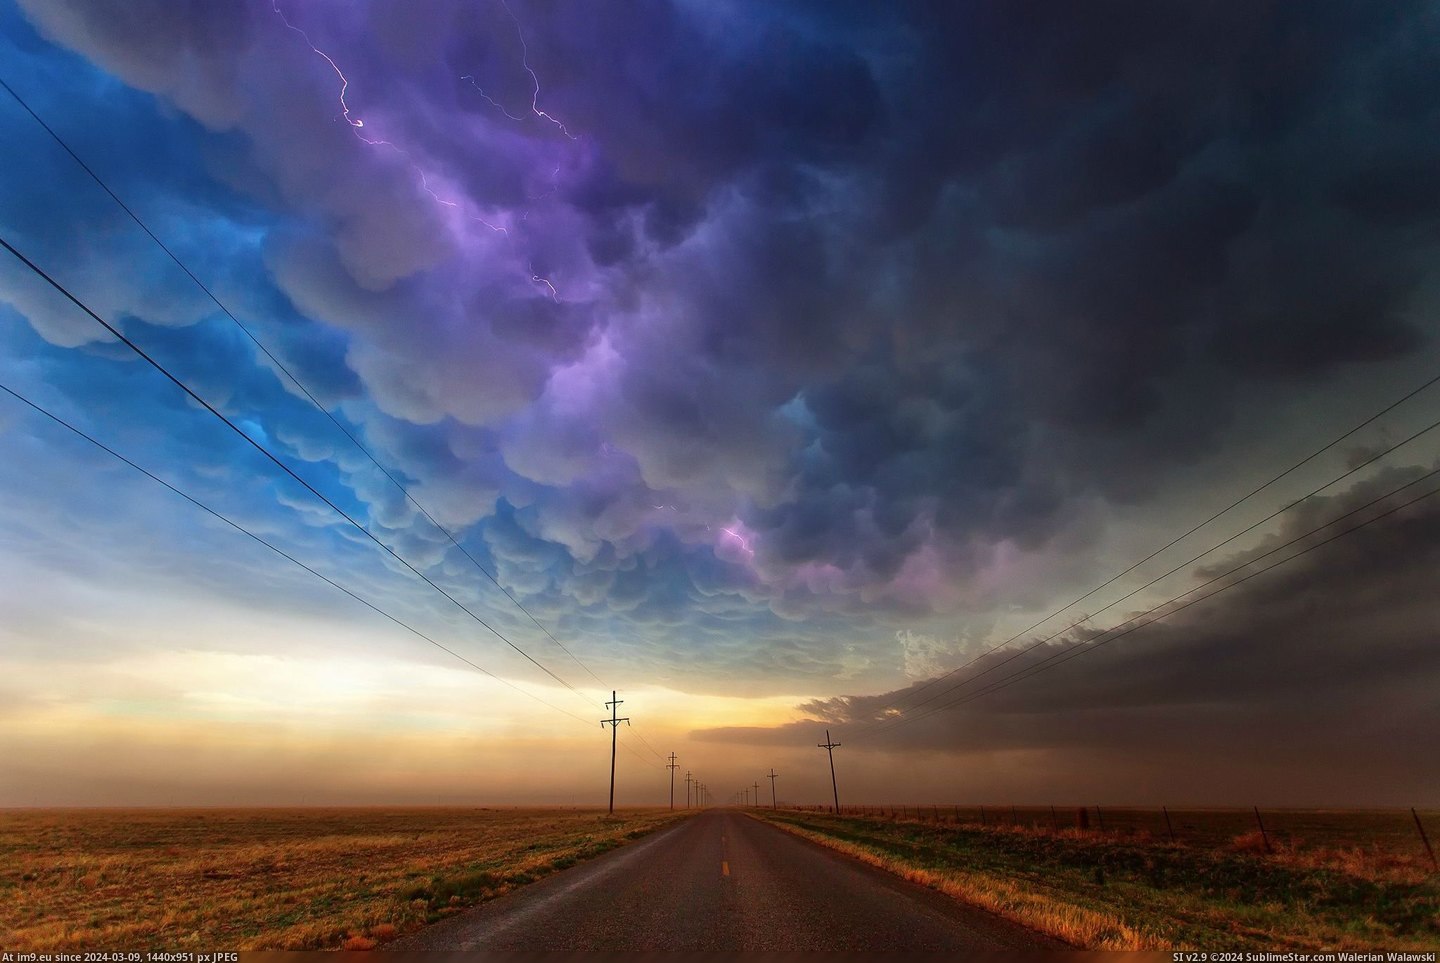 #Texas #Storm #Stunning [Pics] Stunning Storm Over Texas Pic. (Image of album My r/PICS favs))